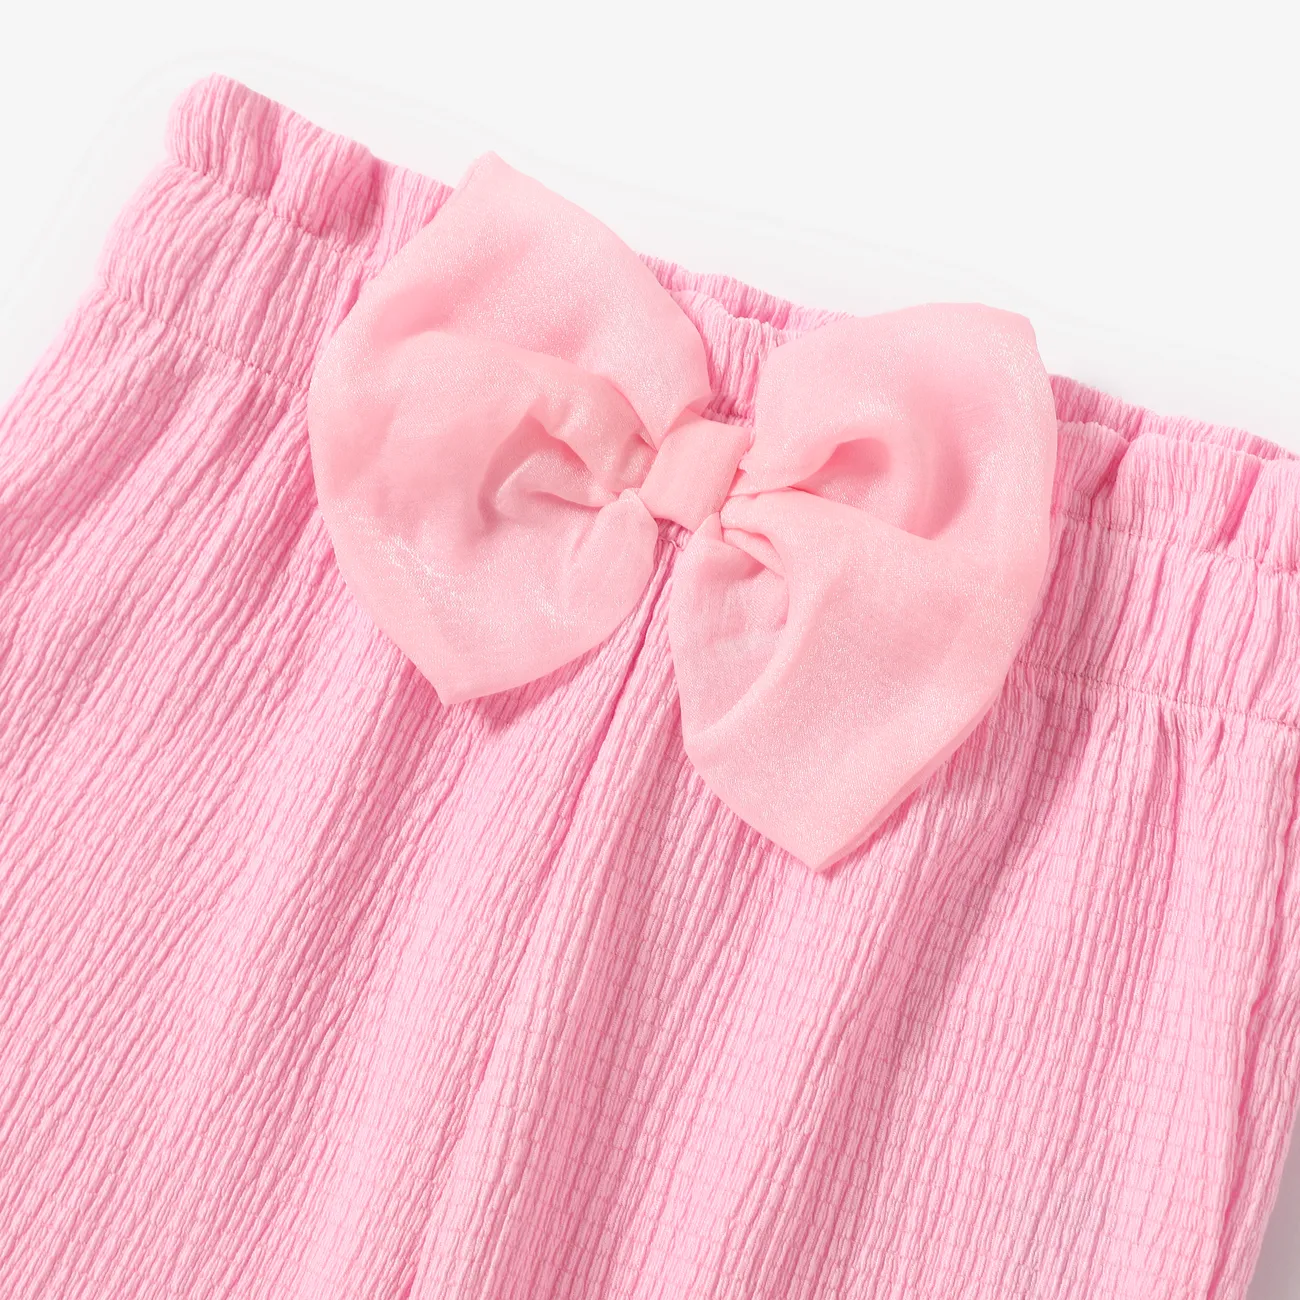 Toddler Girl 2pcs Mesh Spliced Top and Ruffled Pants Set Pink big image 1